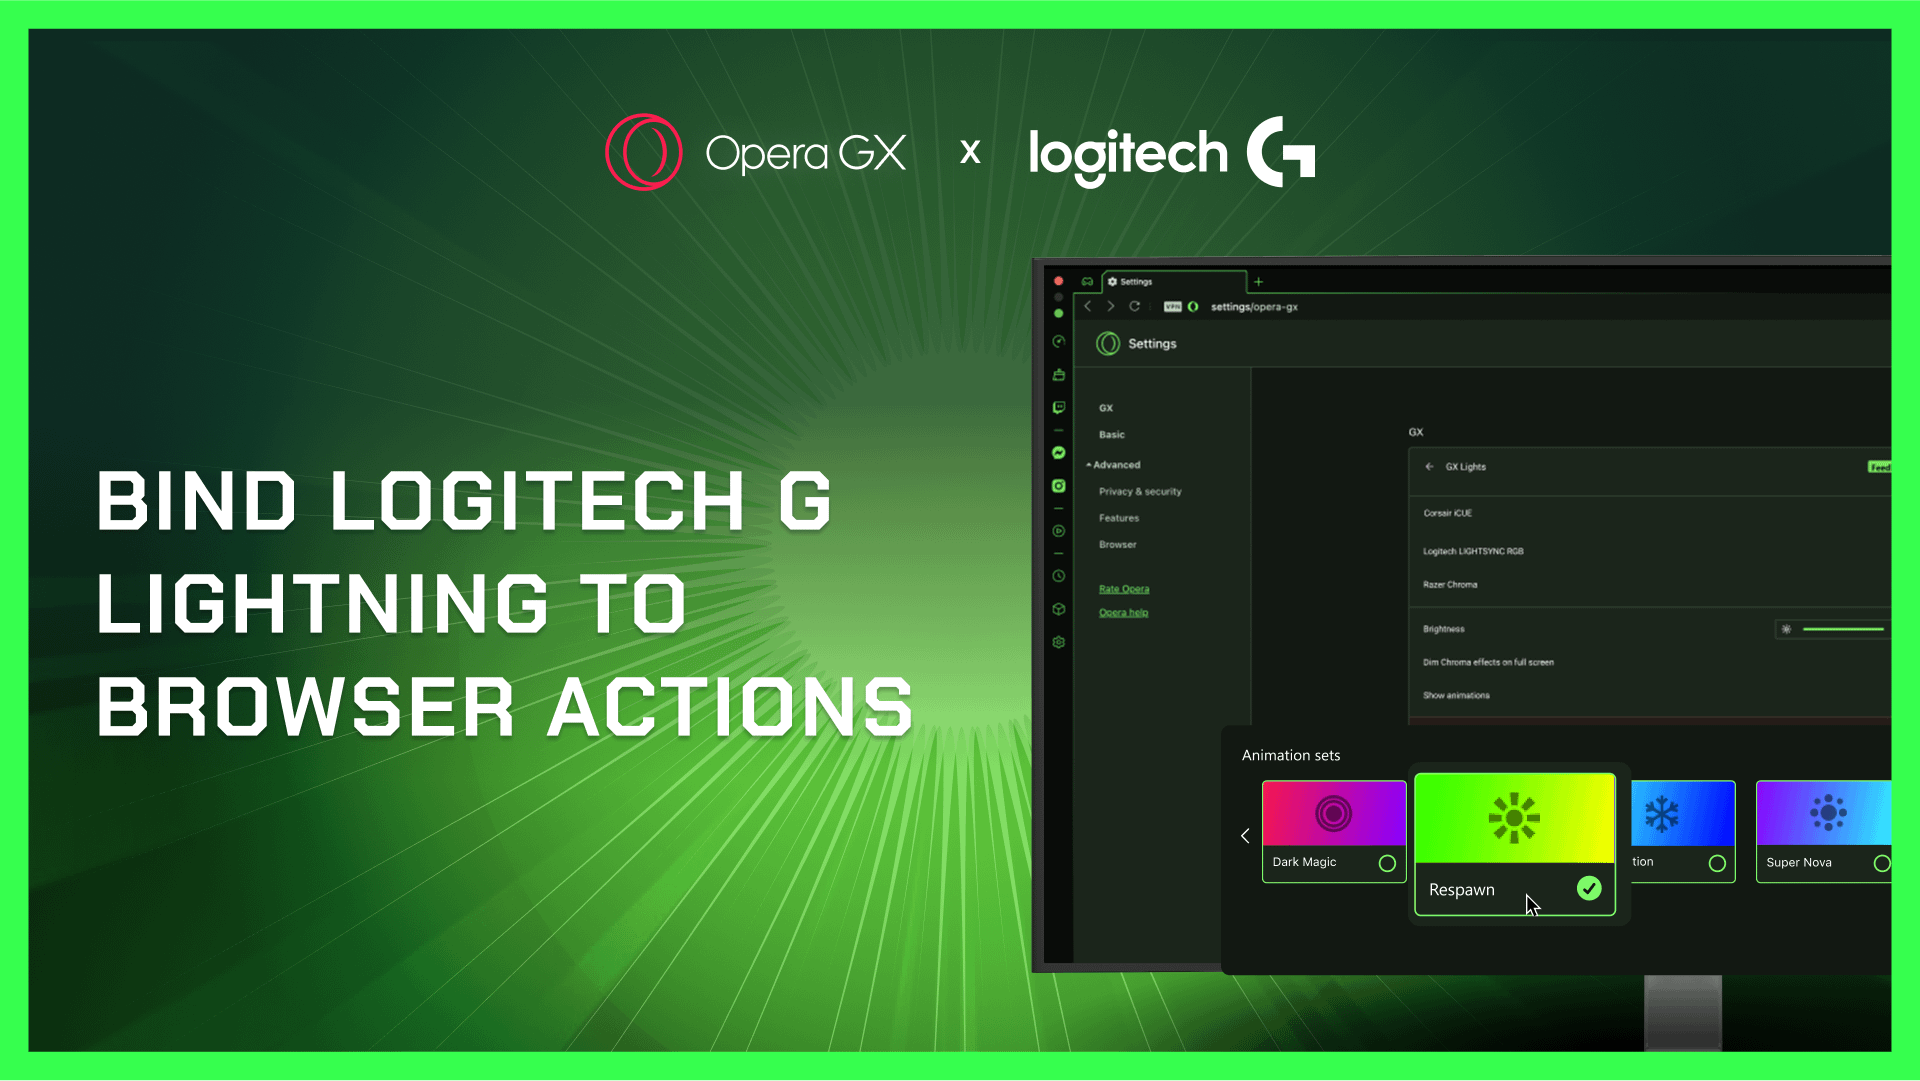 Opera GX integrates Logitech G LIGHTSYNC RGB to make gamers' RGB